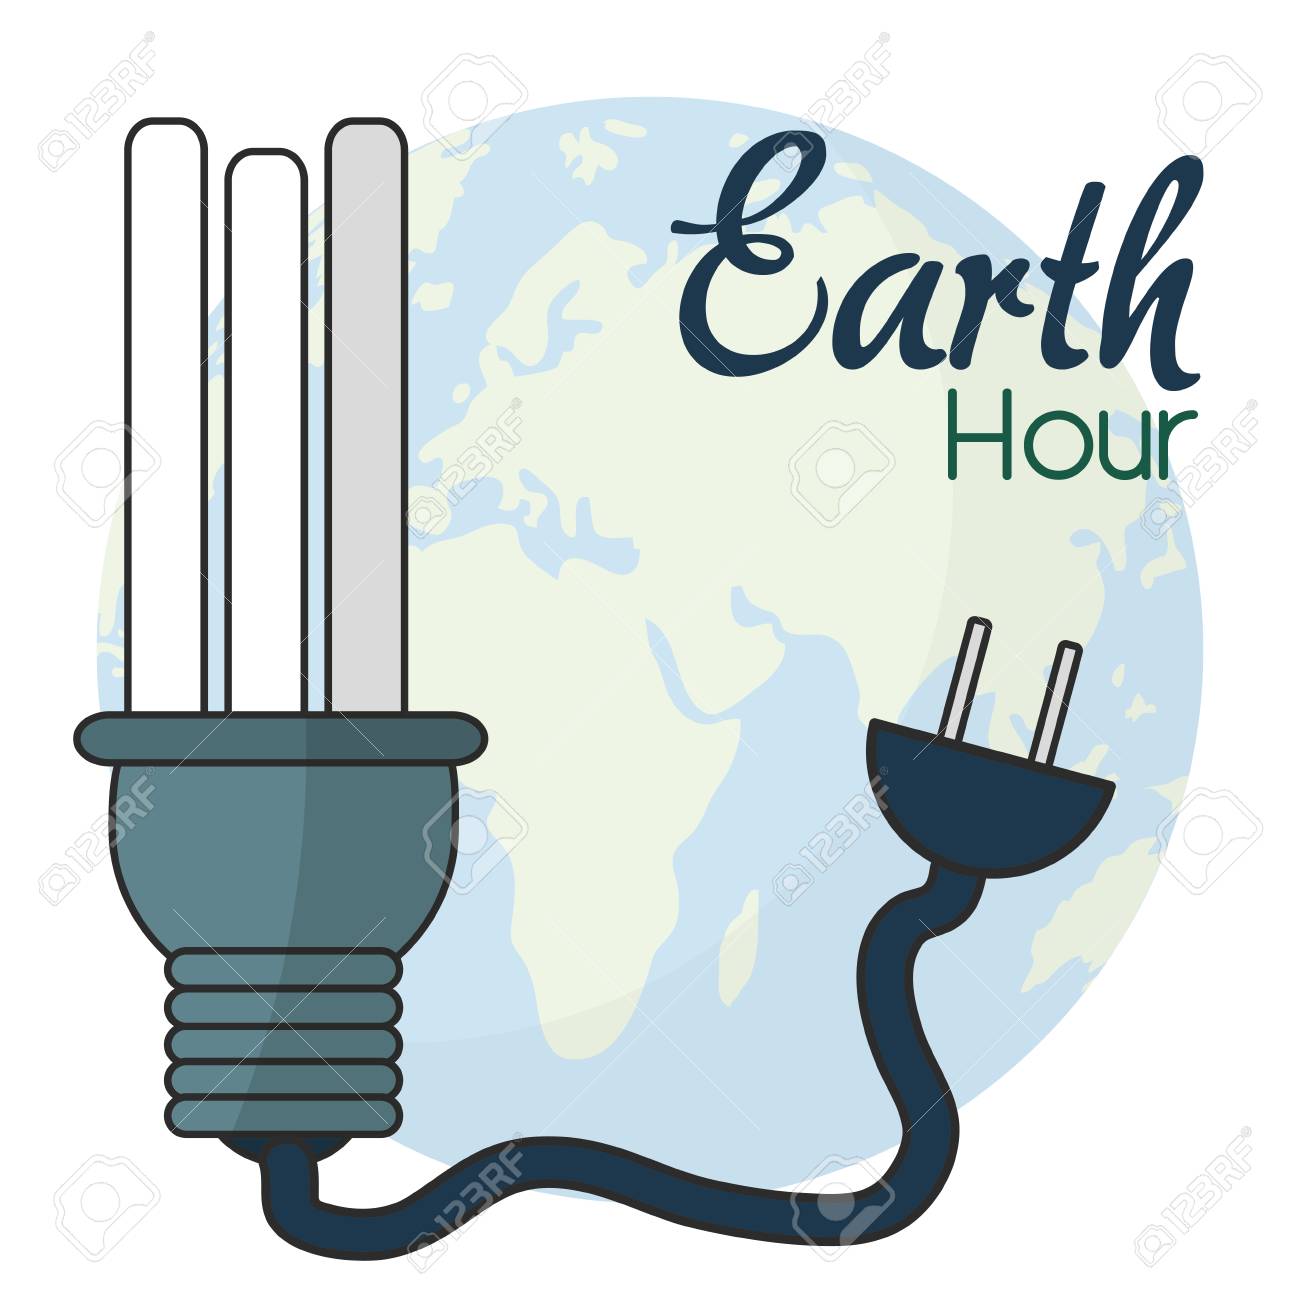 Earth Hour Clipart